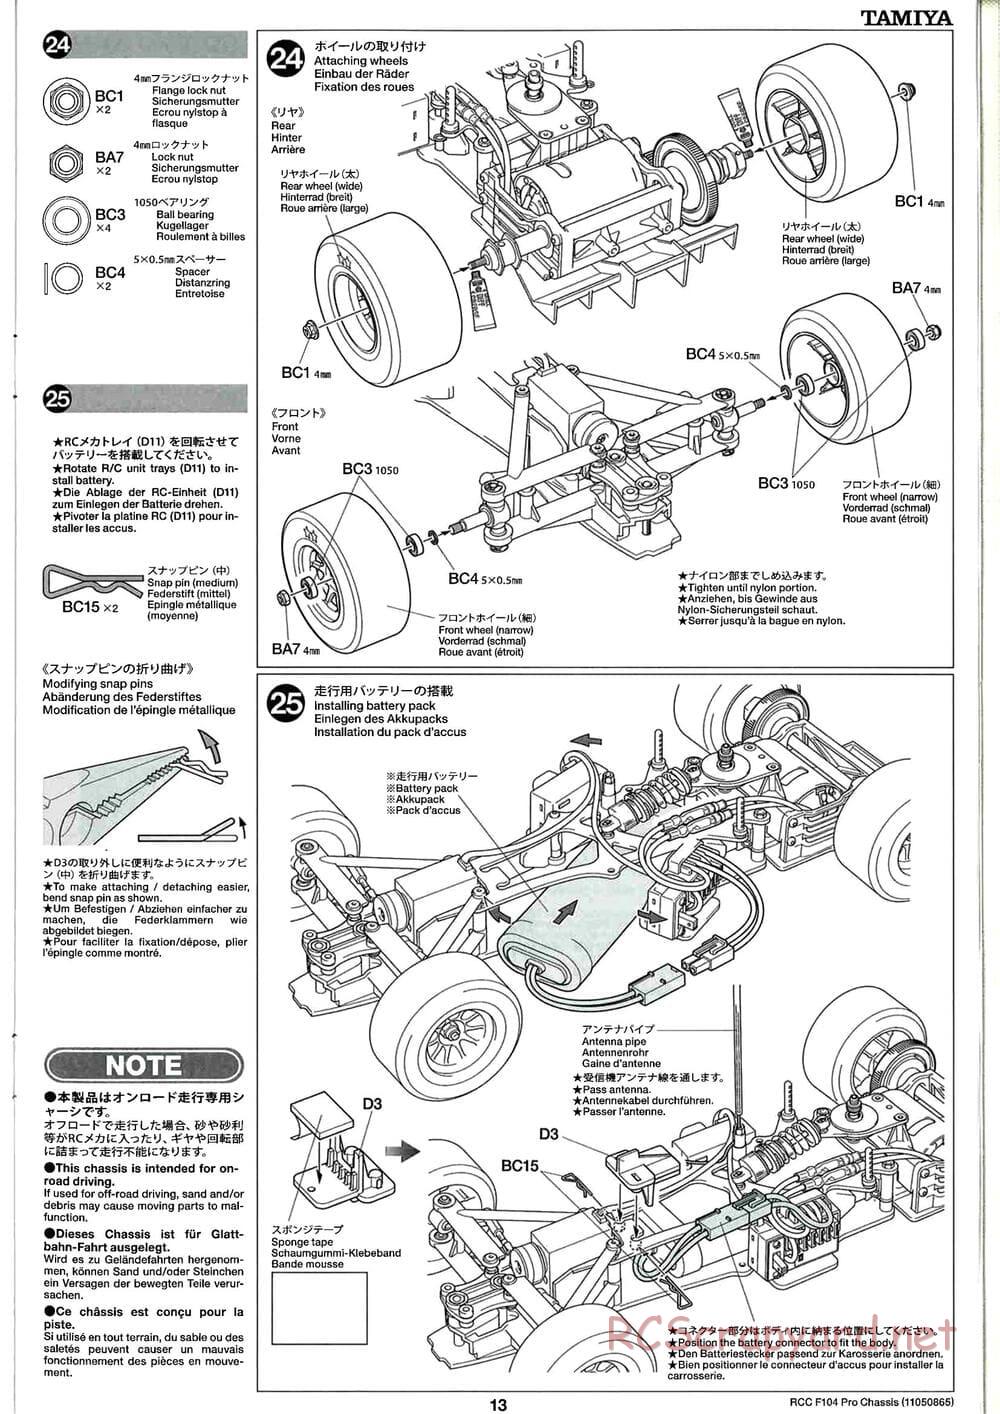 Tamiya - F104 Pro Chassis - Manual - Page 13